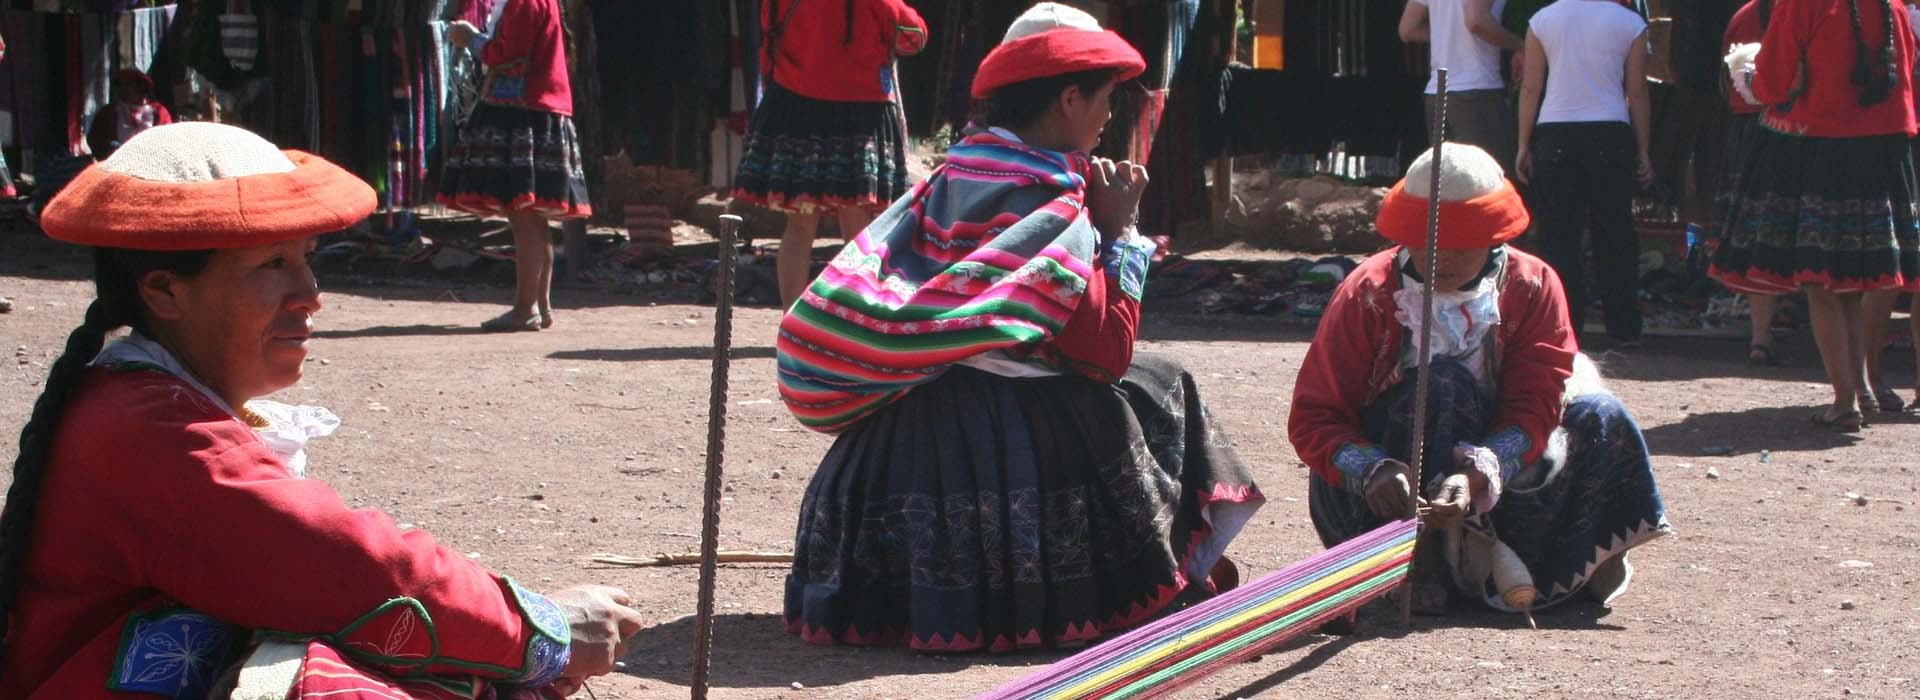 Visiter Huchuy Qosqo - Pérou